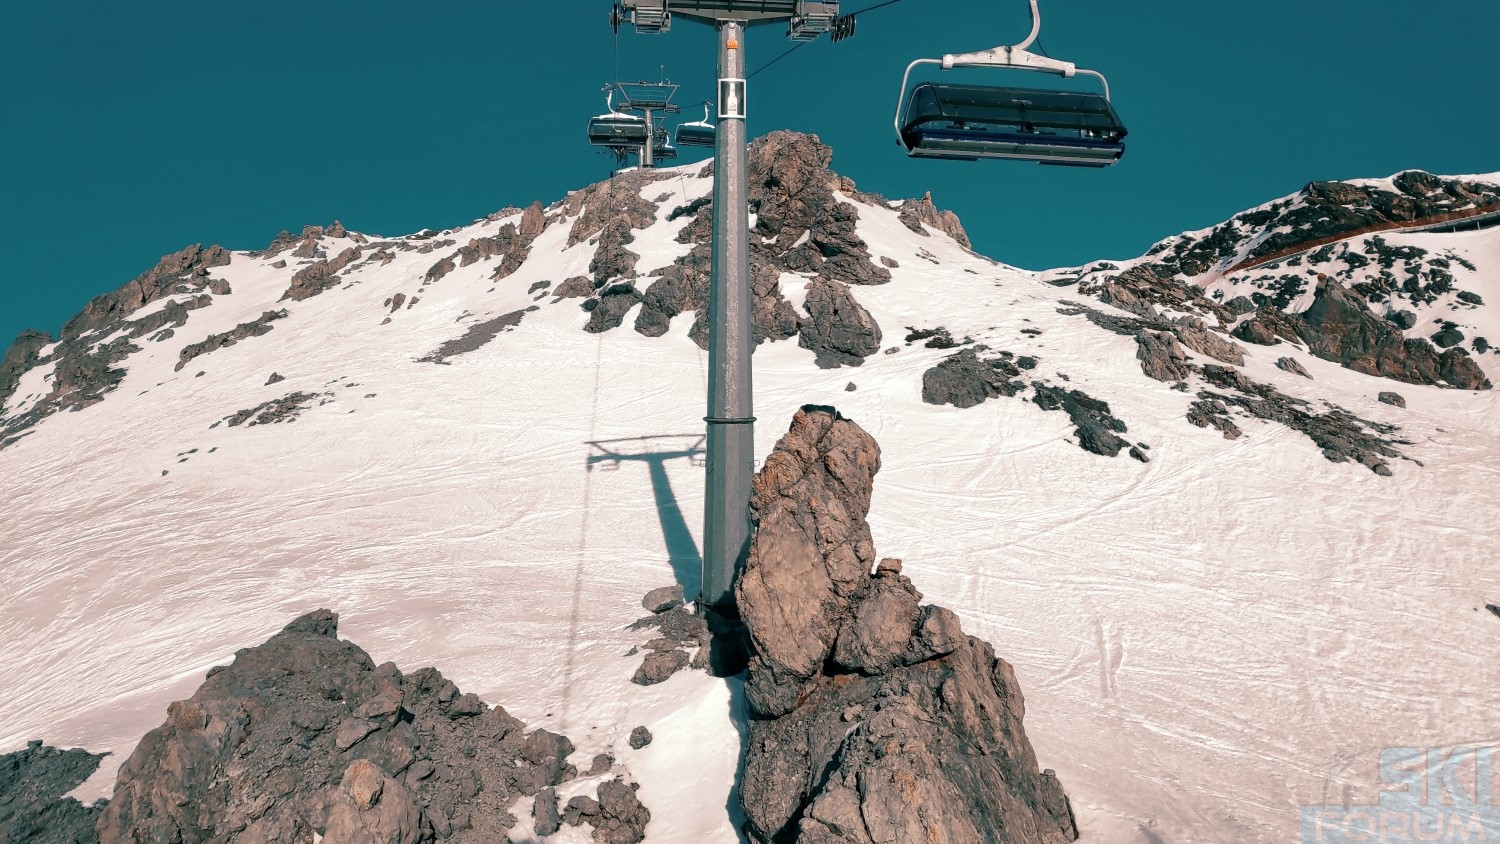 291025-sciare-ad-arosa-skiing-187.jpg